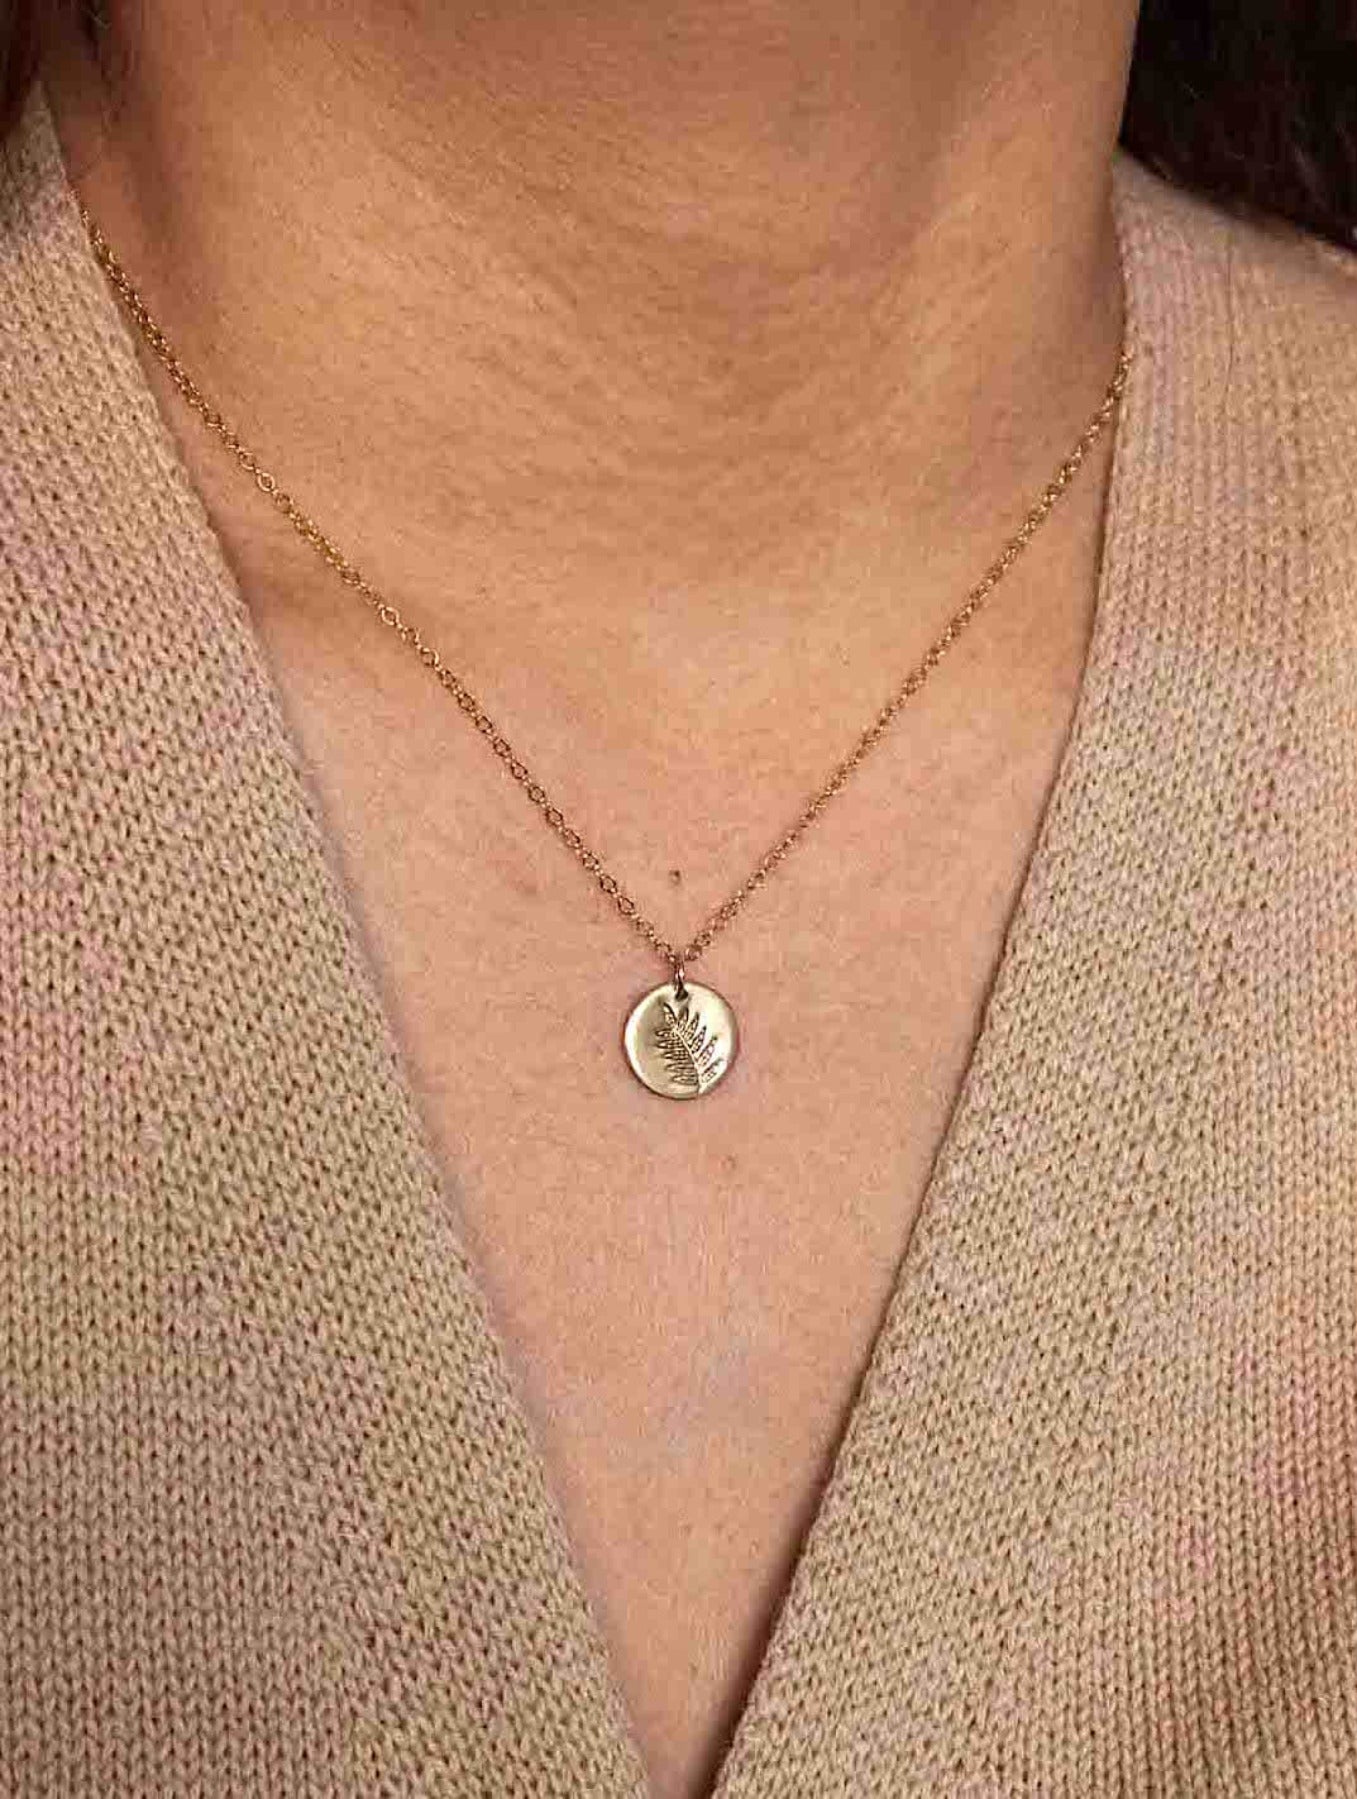 Rowan Birth tree necklace